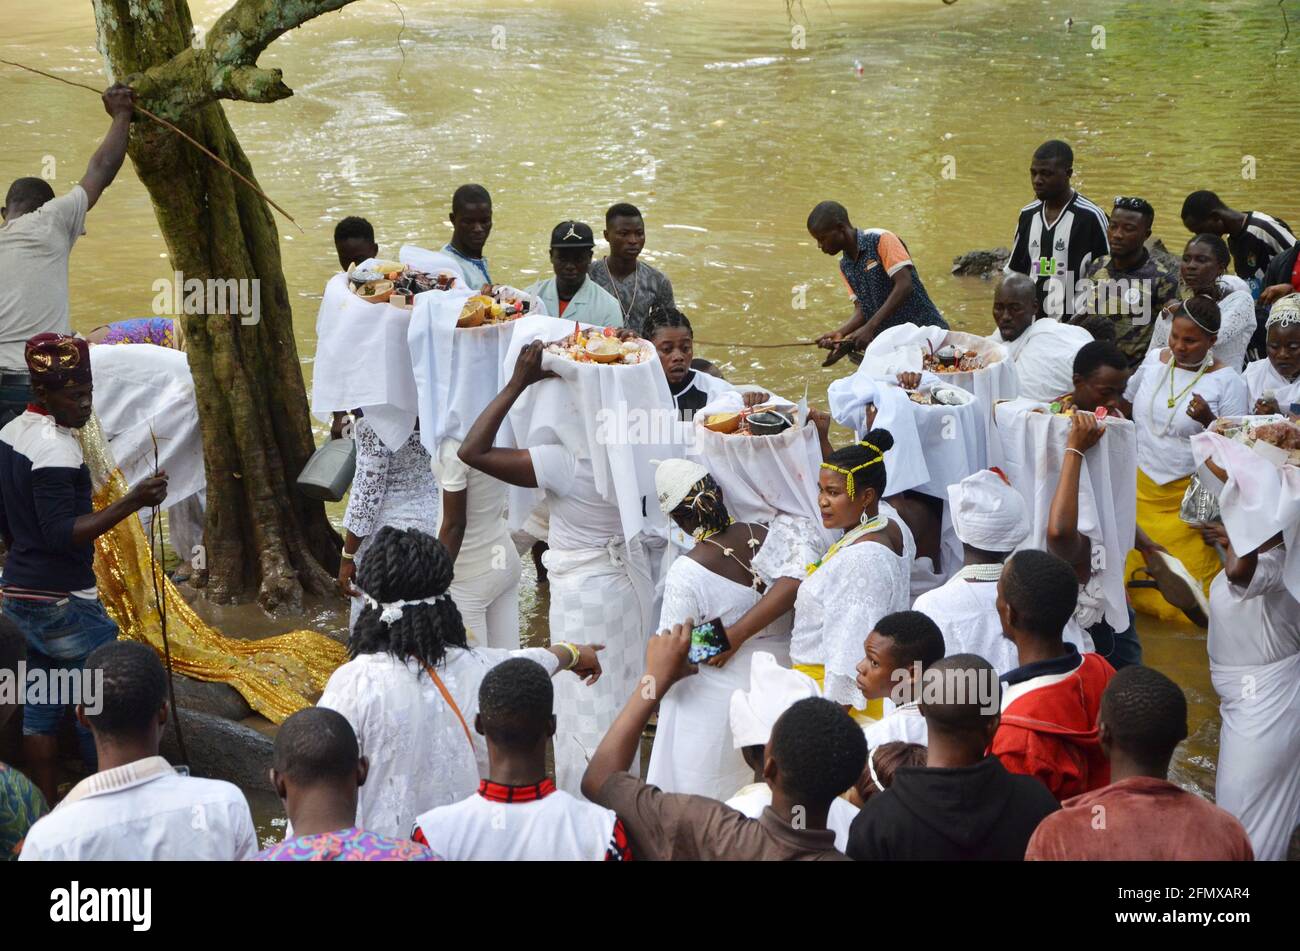 Osun Osogbo Spiritual Ecstasy: Anhänger, die Osun Göttin während des Osun Osogbo Festivals Opfer bringen. Stockfoto